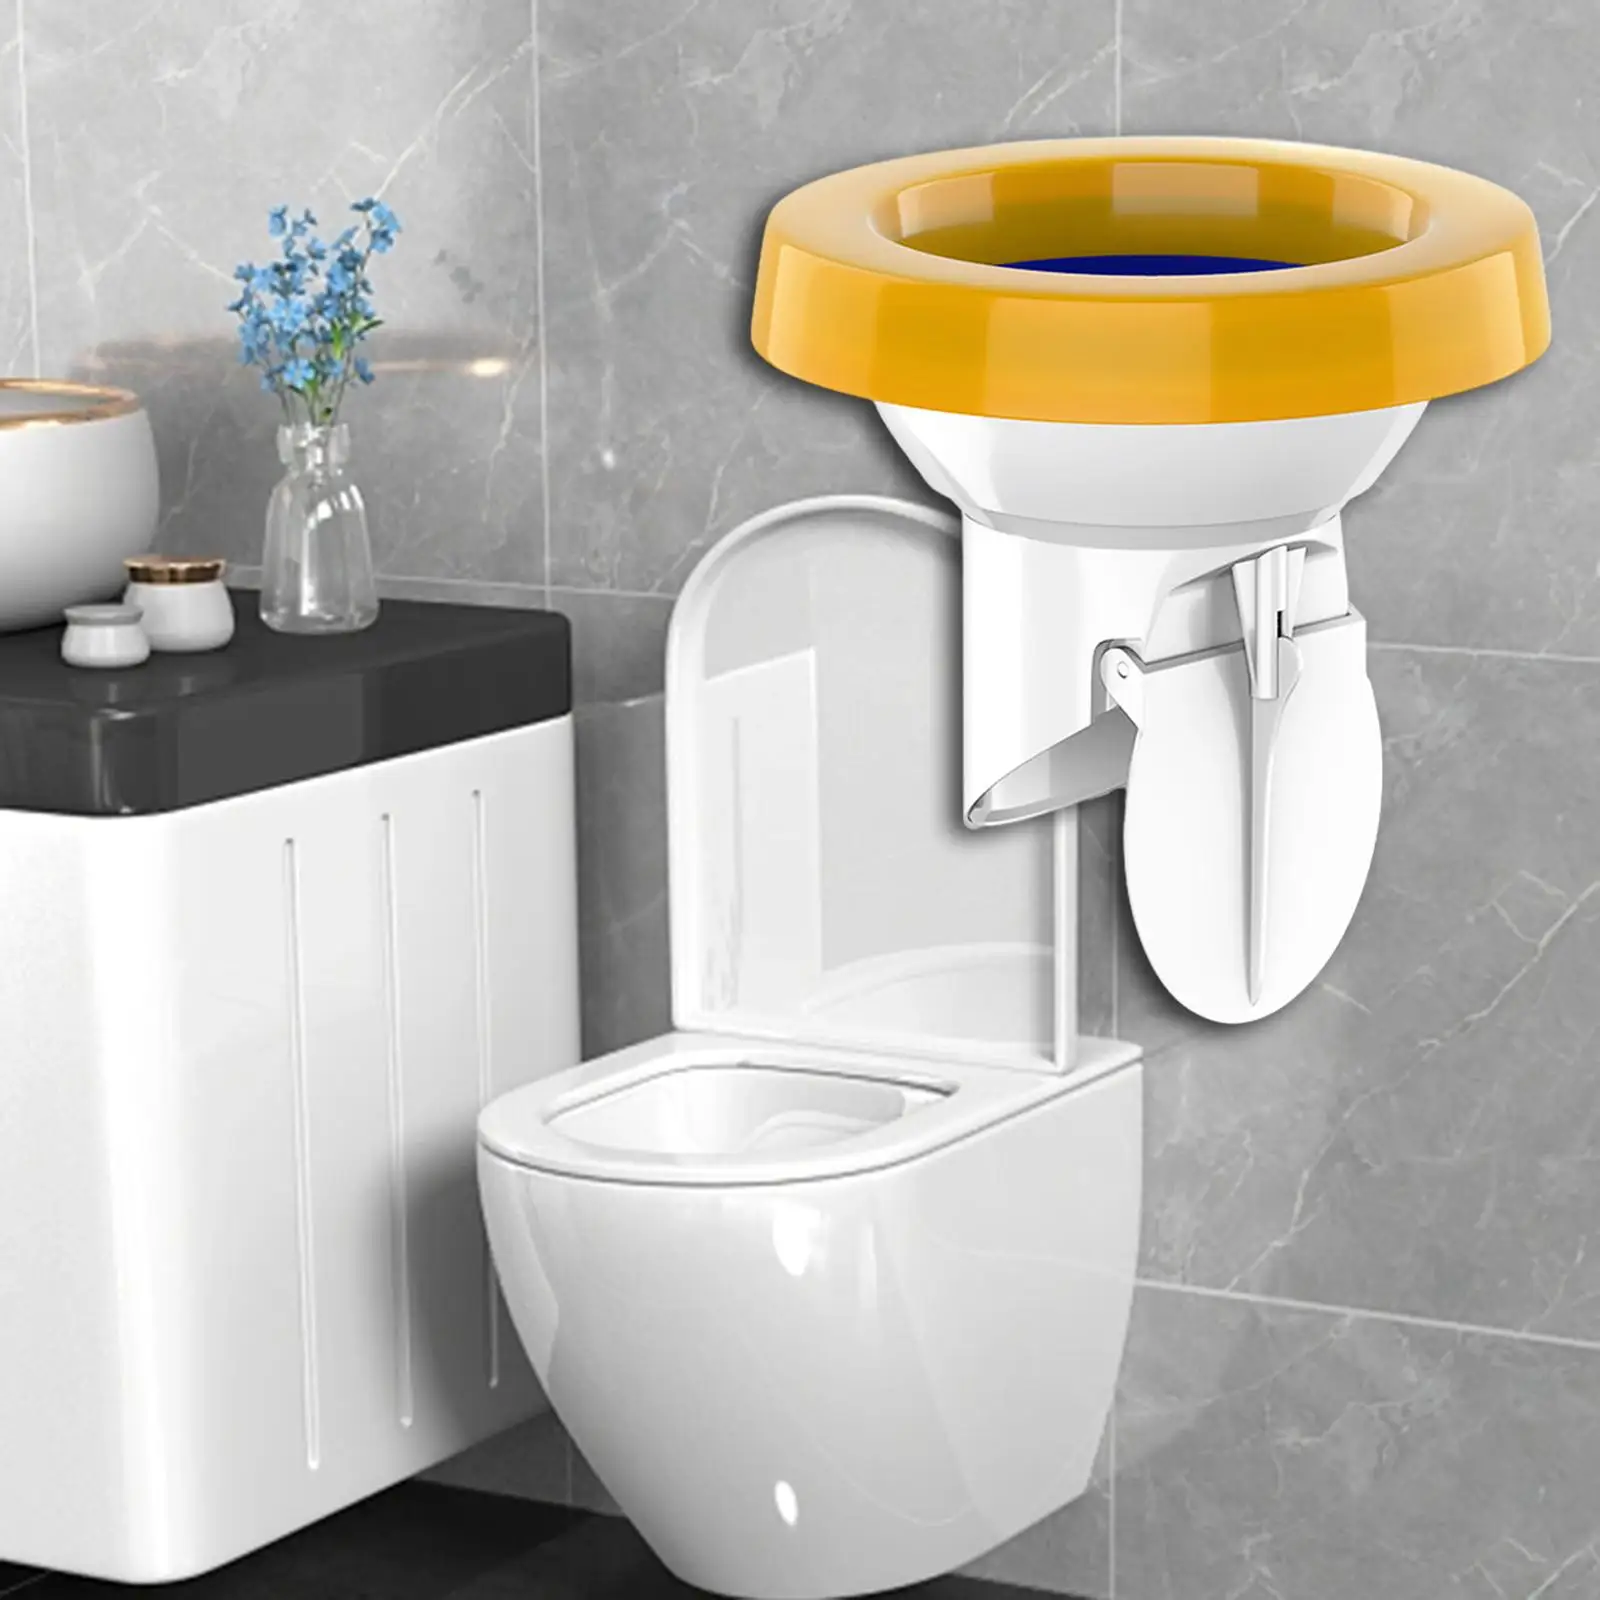 Toilet Flange Ring Easy Install Drain Backflow Preventer Toilet Pan Odor Prevent Plug for Home Bathroom Hotel Repairing Parts